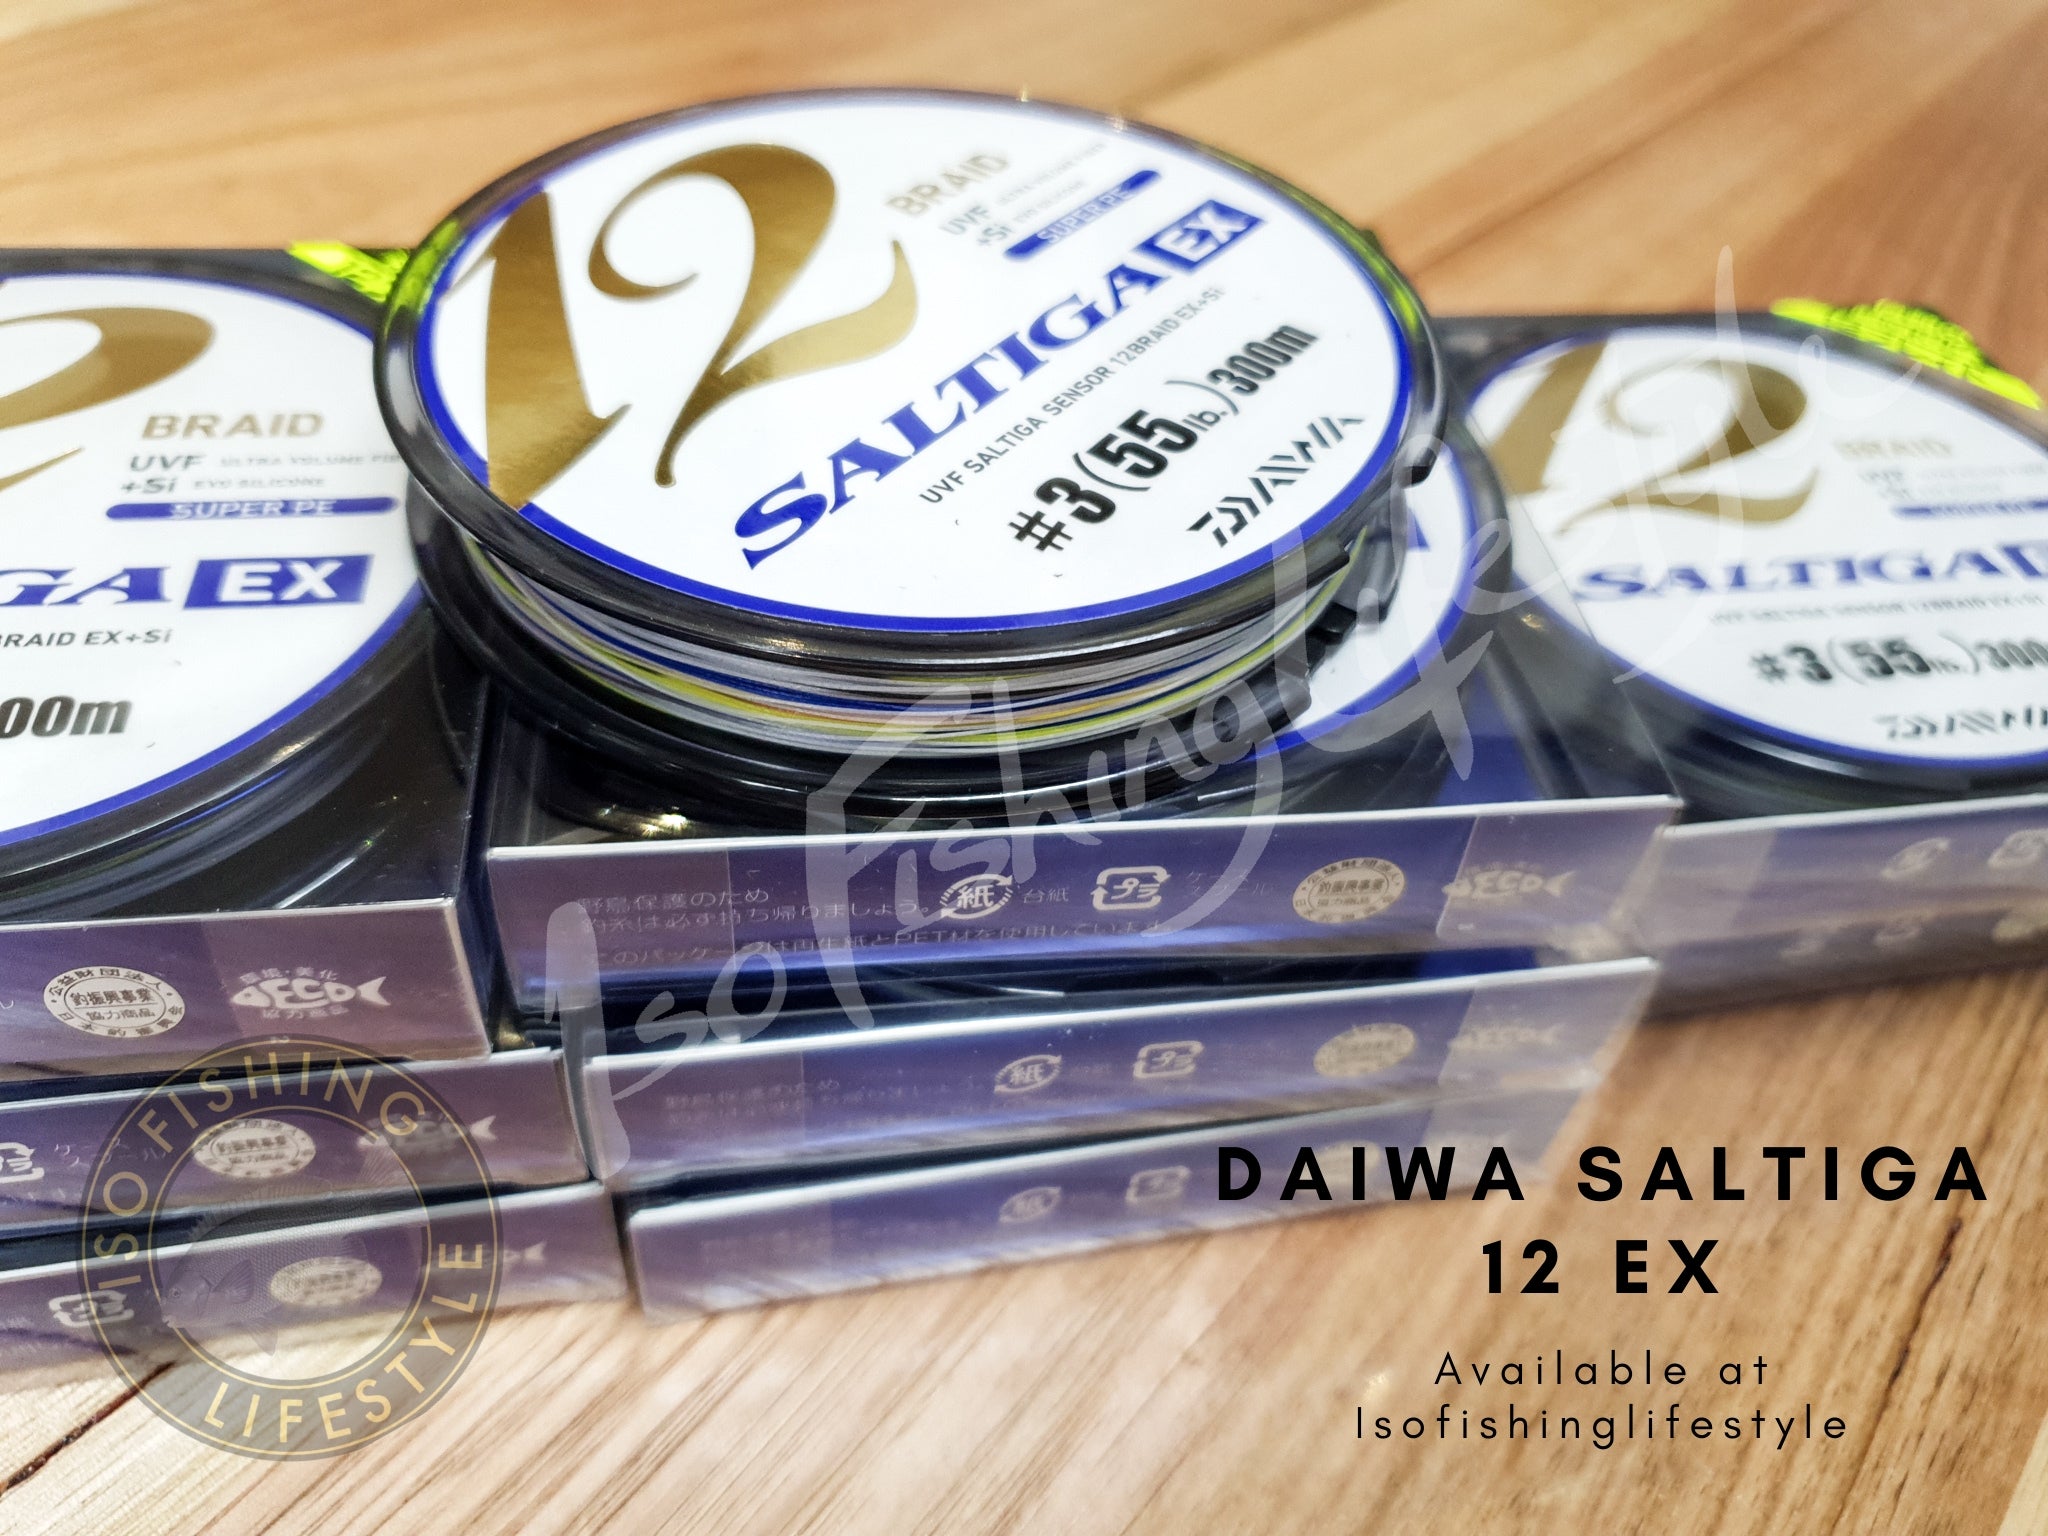 Daiwa New Saltiga 12 EX UVF Braid PE Line